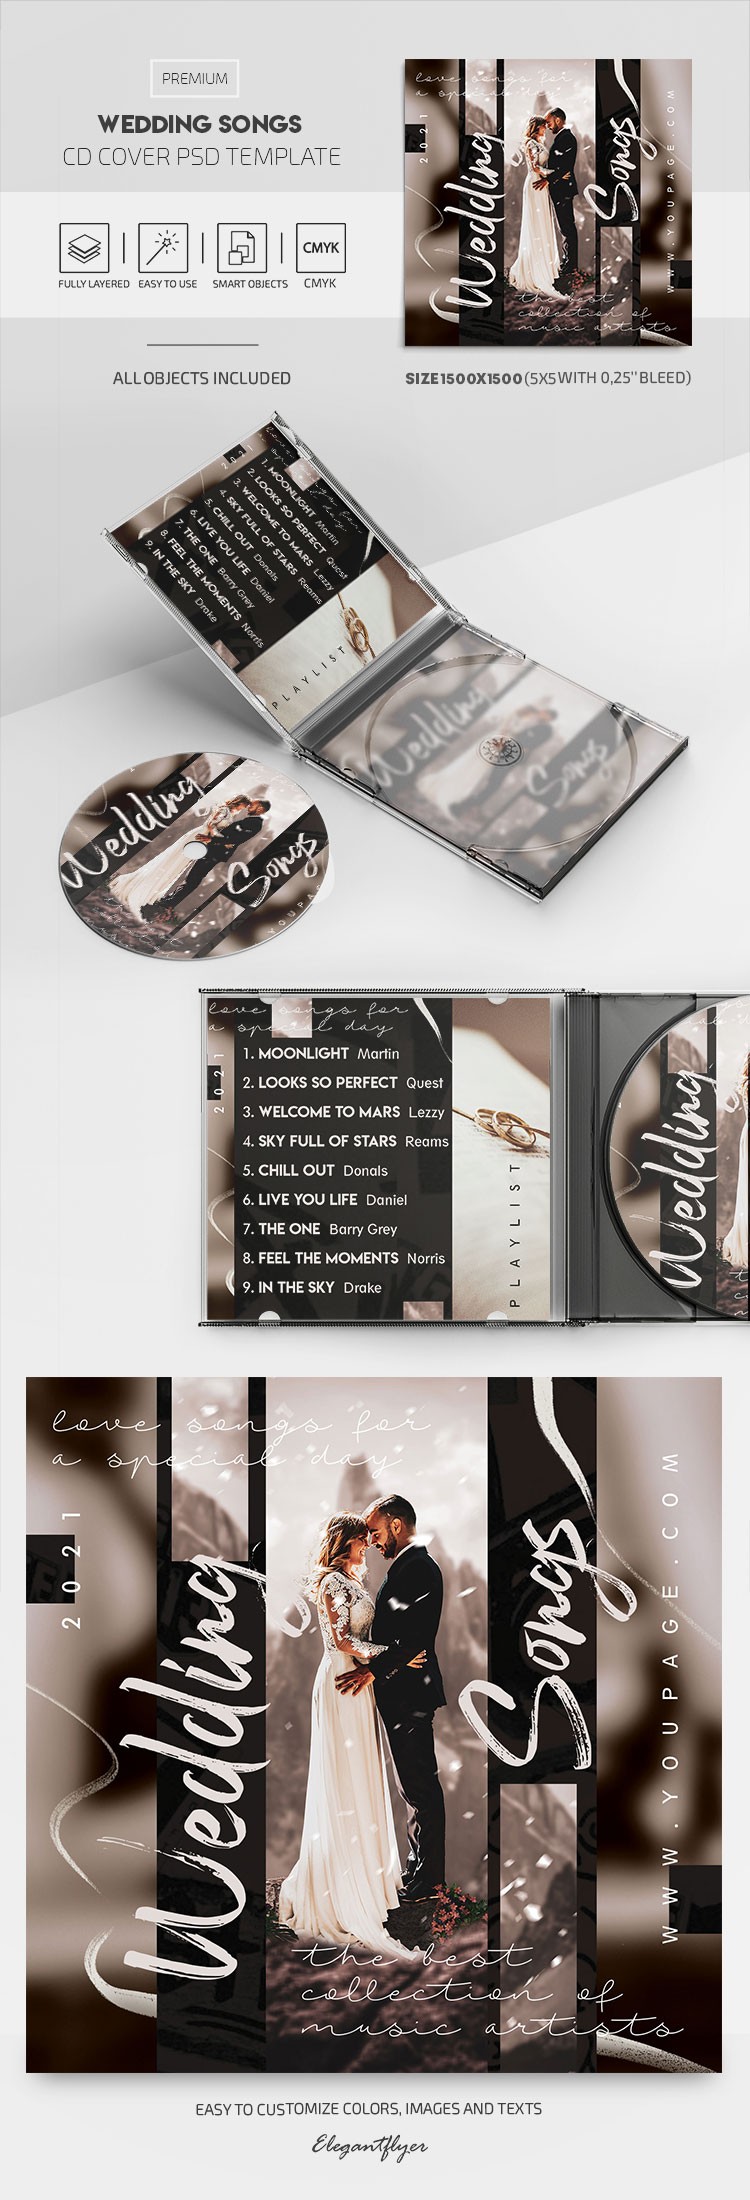 Capa do CD de músicas de casamento by ElegantFlyer